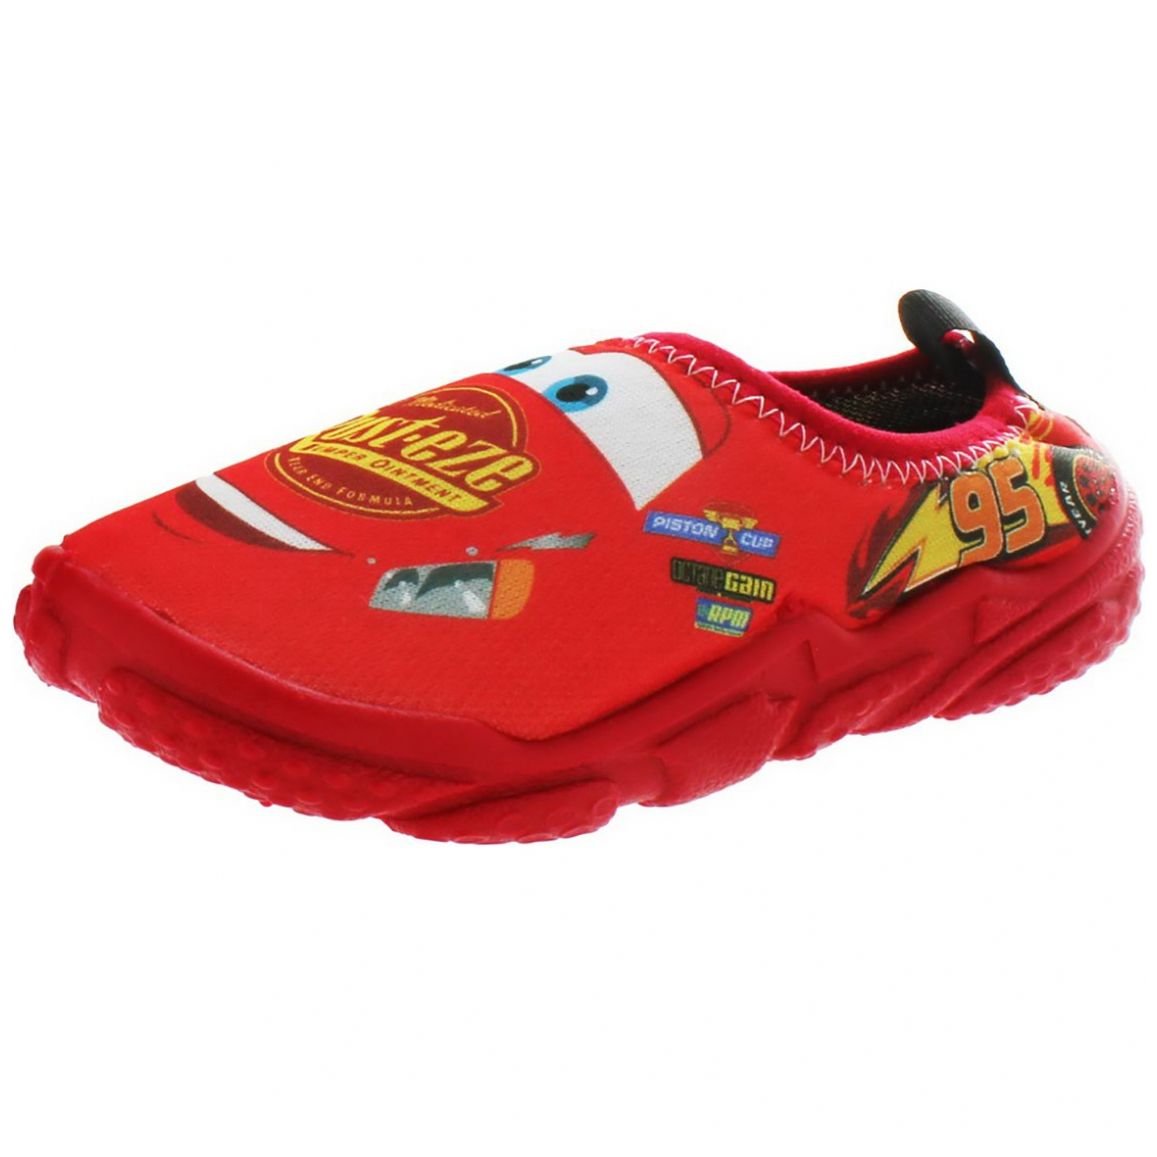 Aquashoes Rojo de Cars para Niño Modelo 3139 Personajes